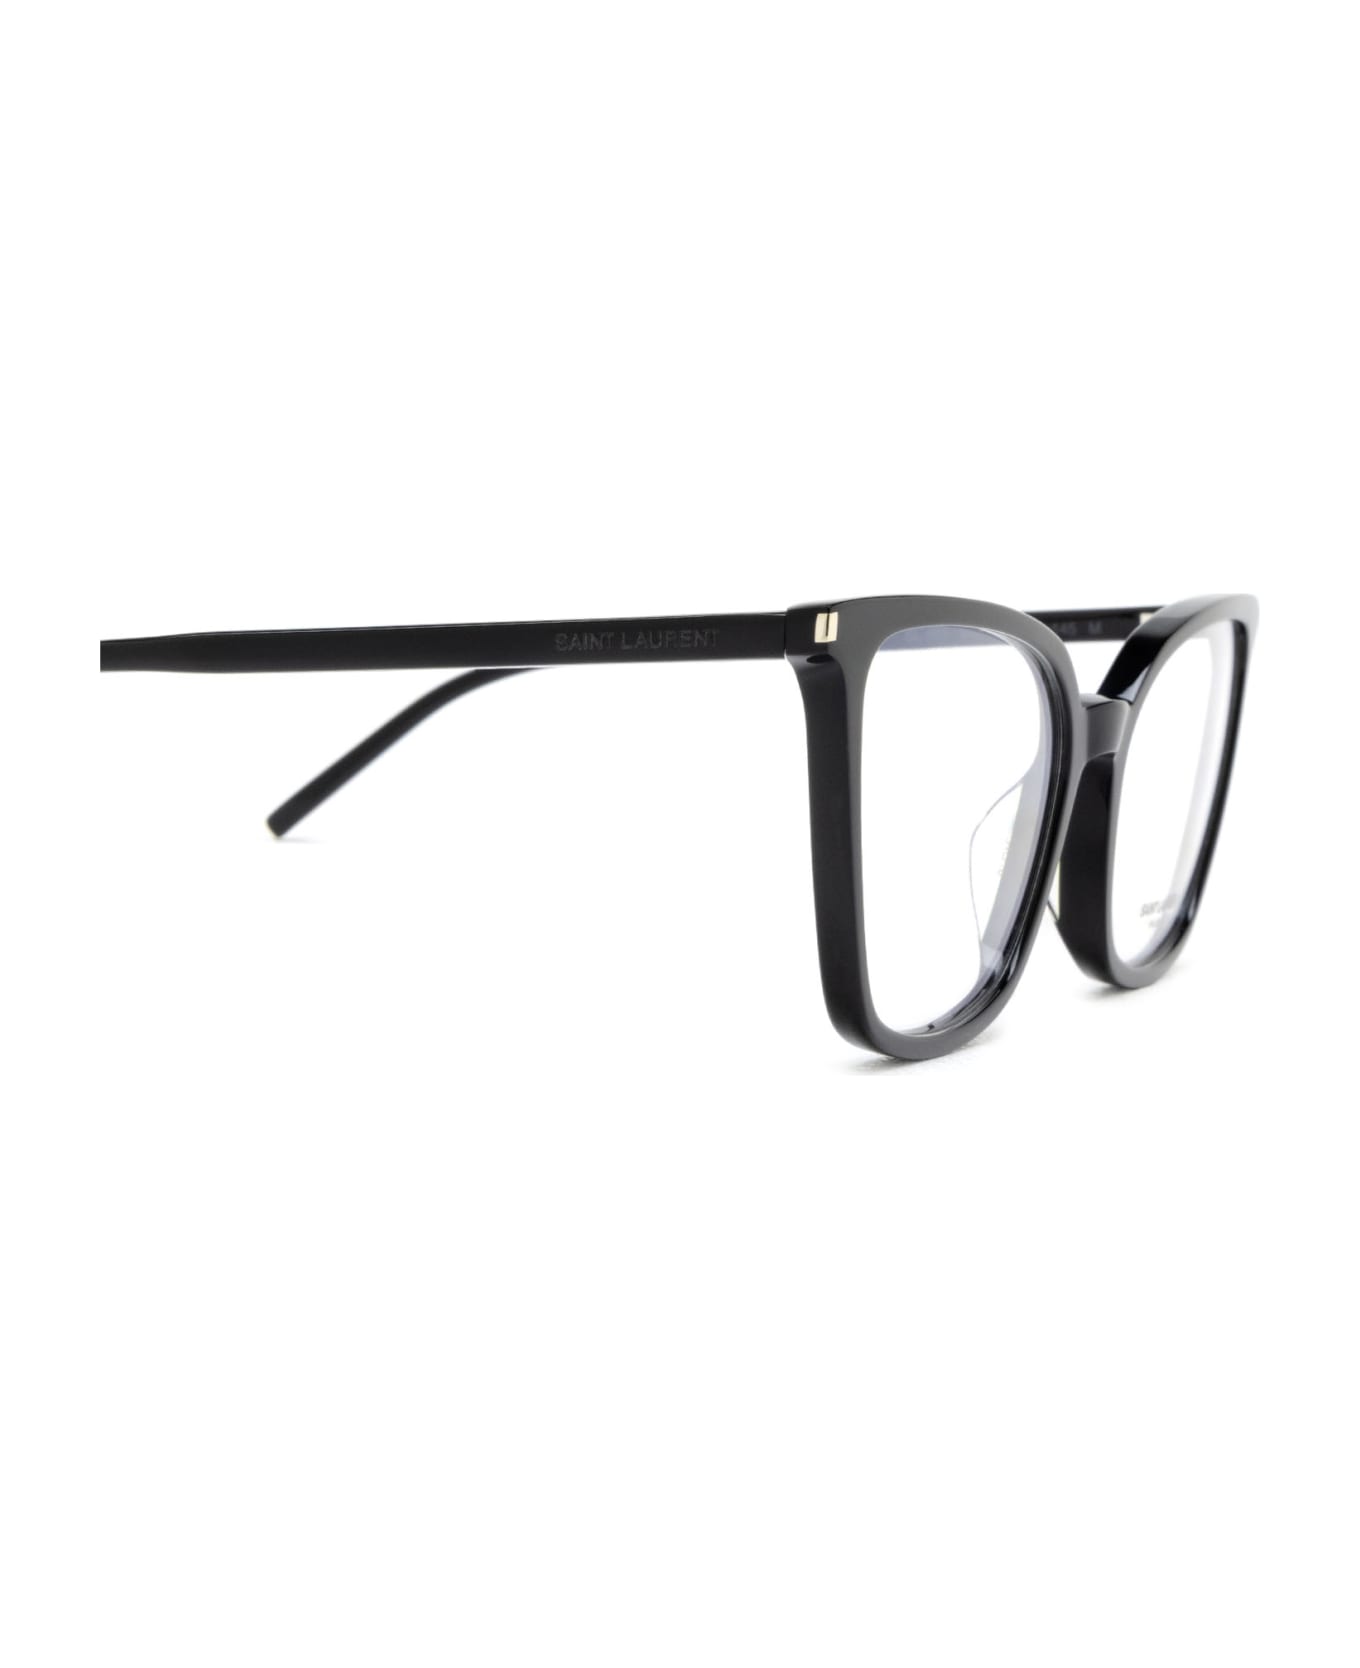 Saint Laurent Eyewear Sl 669 Black Glasses - Black